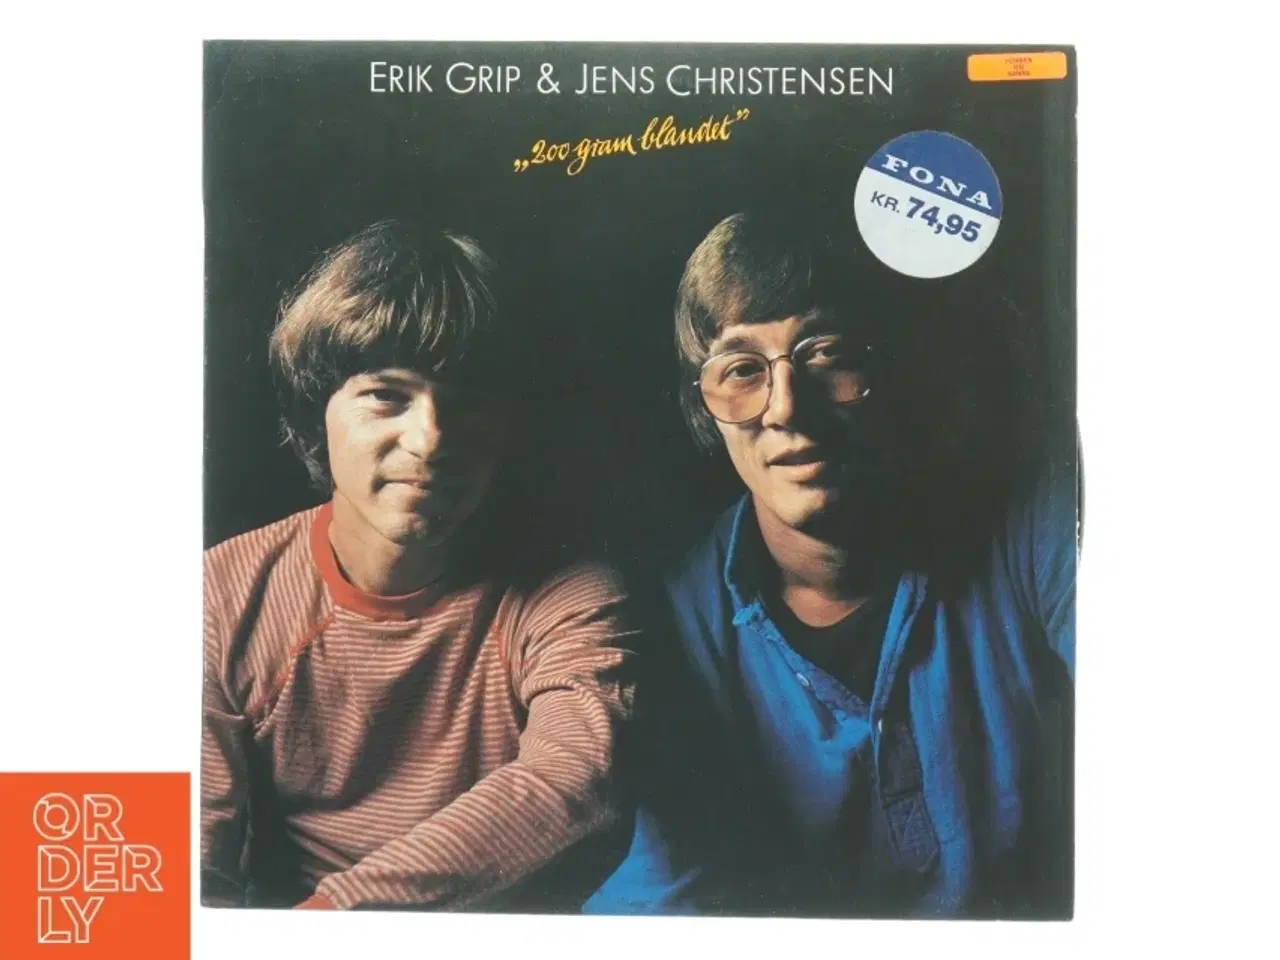 Billede 1 - Erik Grip & Jens Christensen - '200 gram blandet' vinylplade (str. 31 x 31 cm)